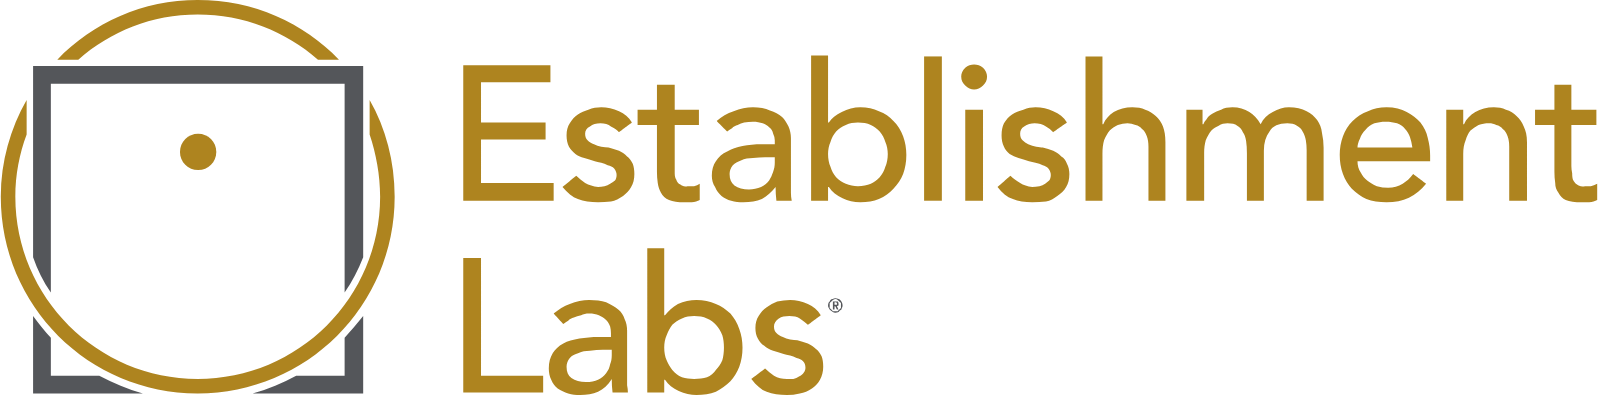 Establishment Labs logo large (transparent PNG)